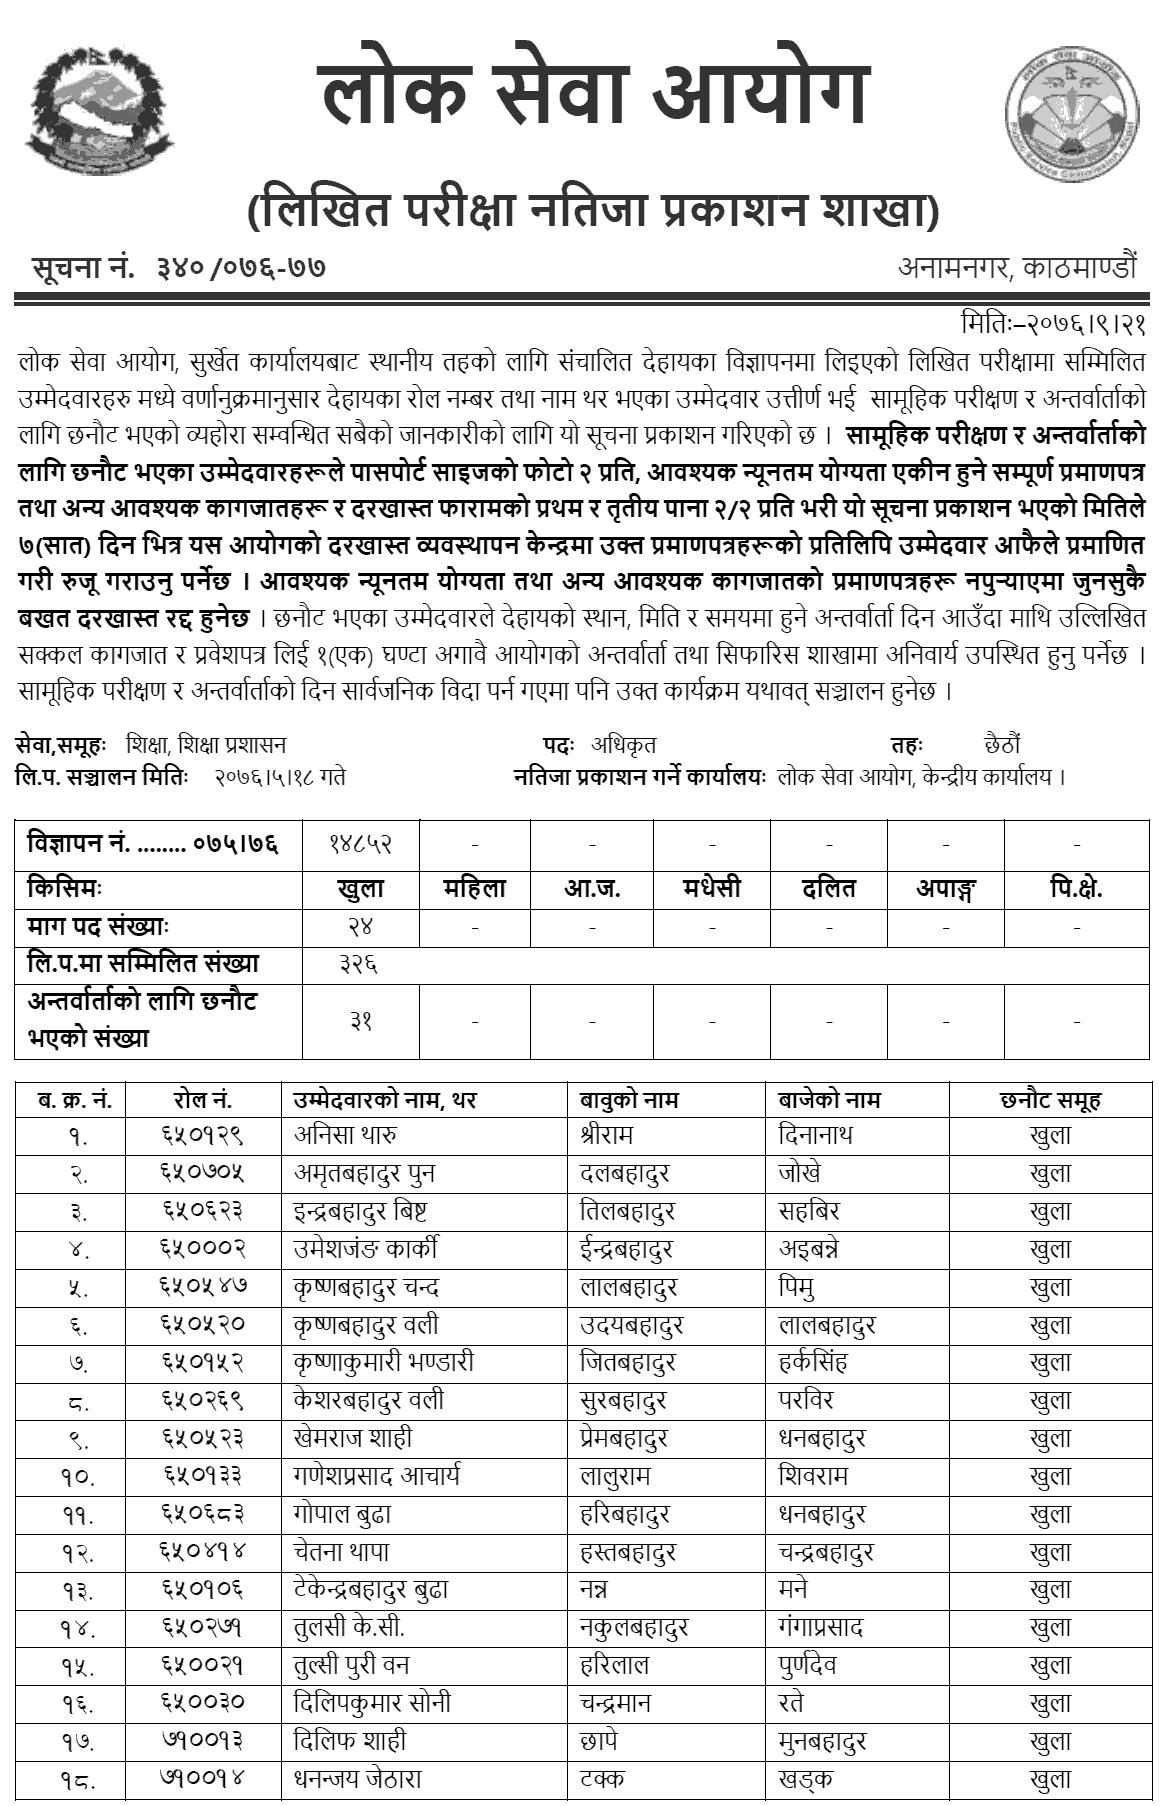 Lok Sewa Aayog Surkhet Local Level 6th Education Service Written Exam Result